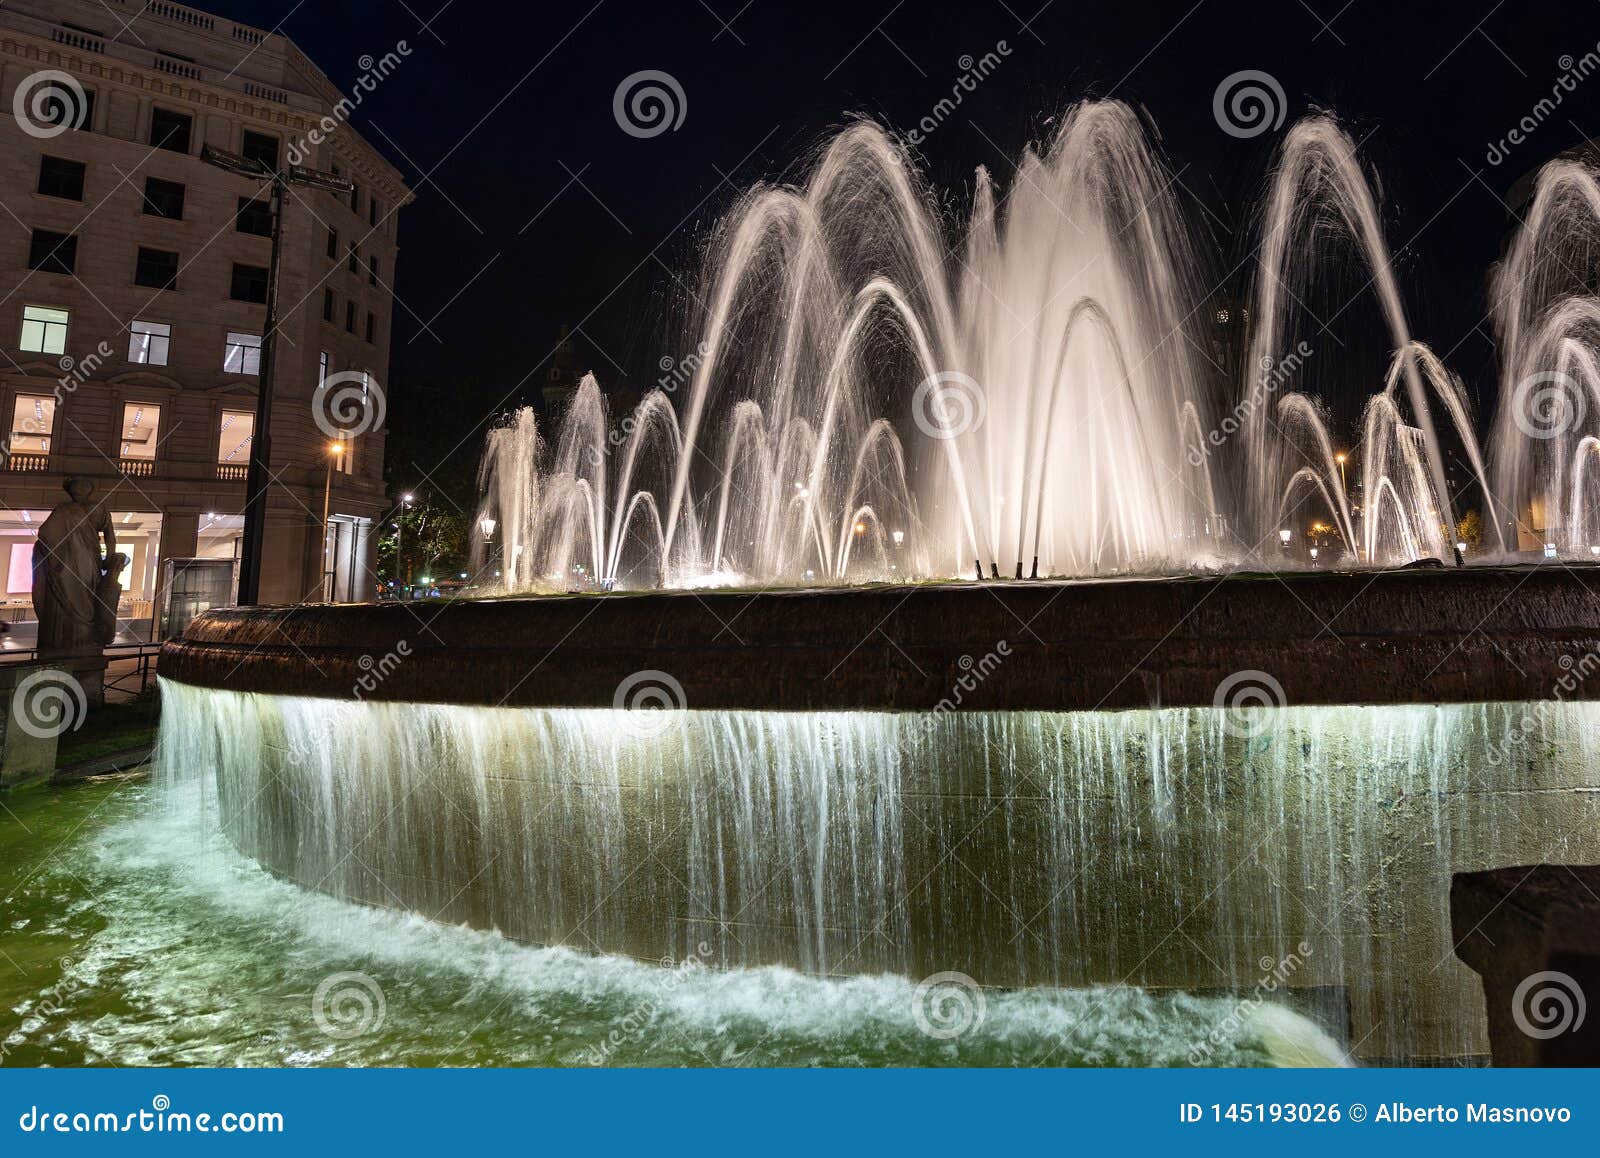 fountain at night - placa de catalunya - barcelona spain